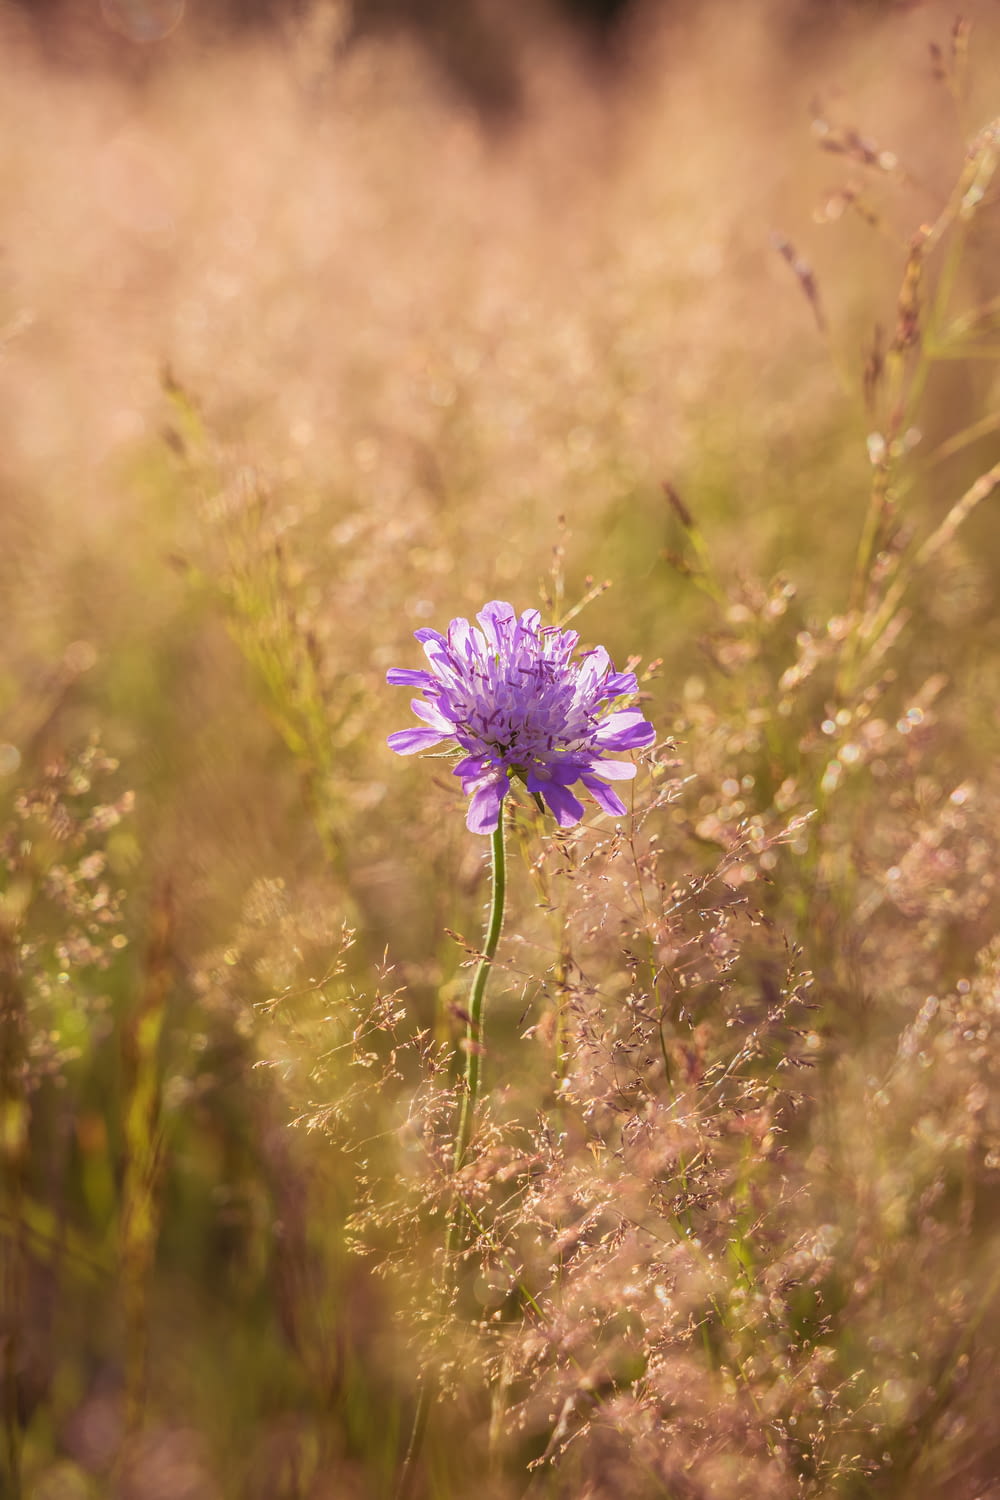 a purple flower in a field of tall grass